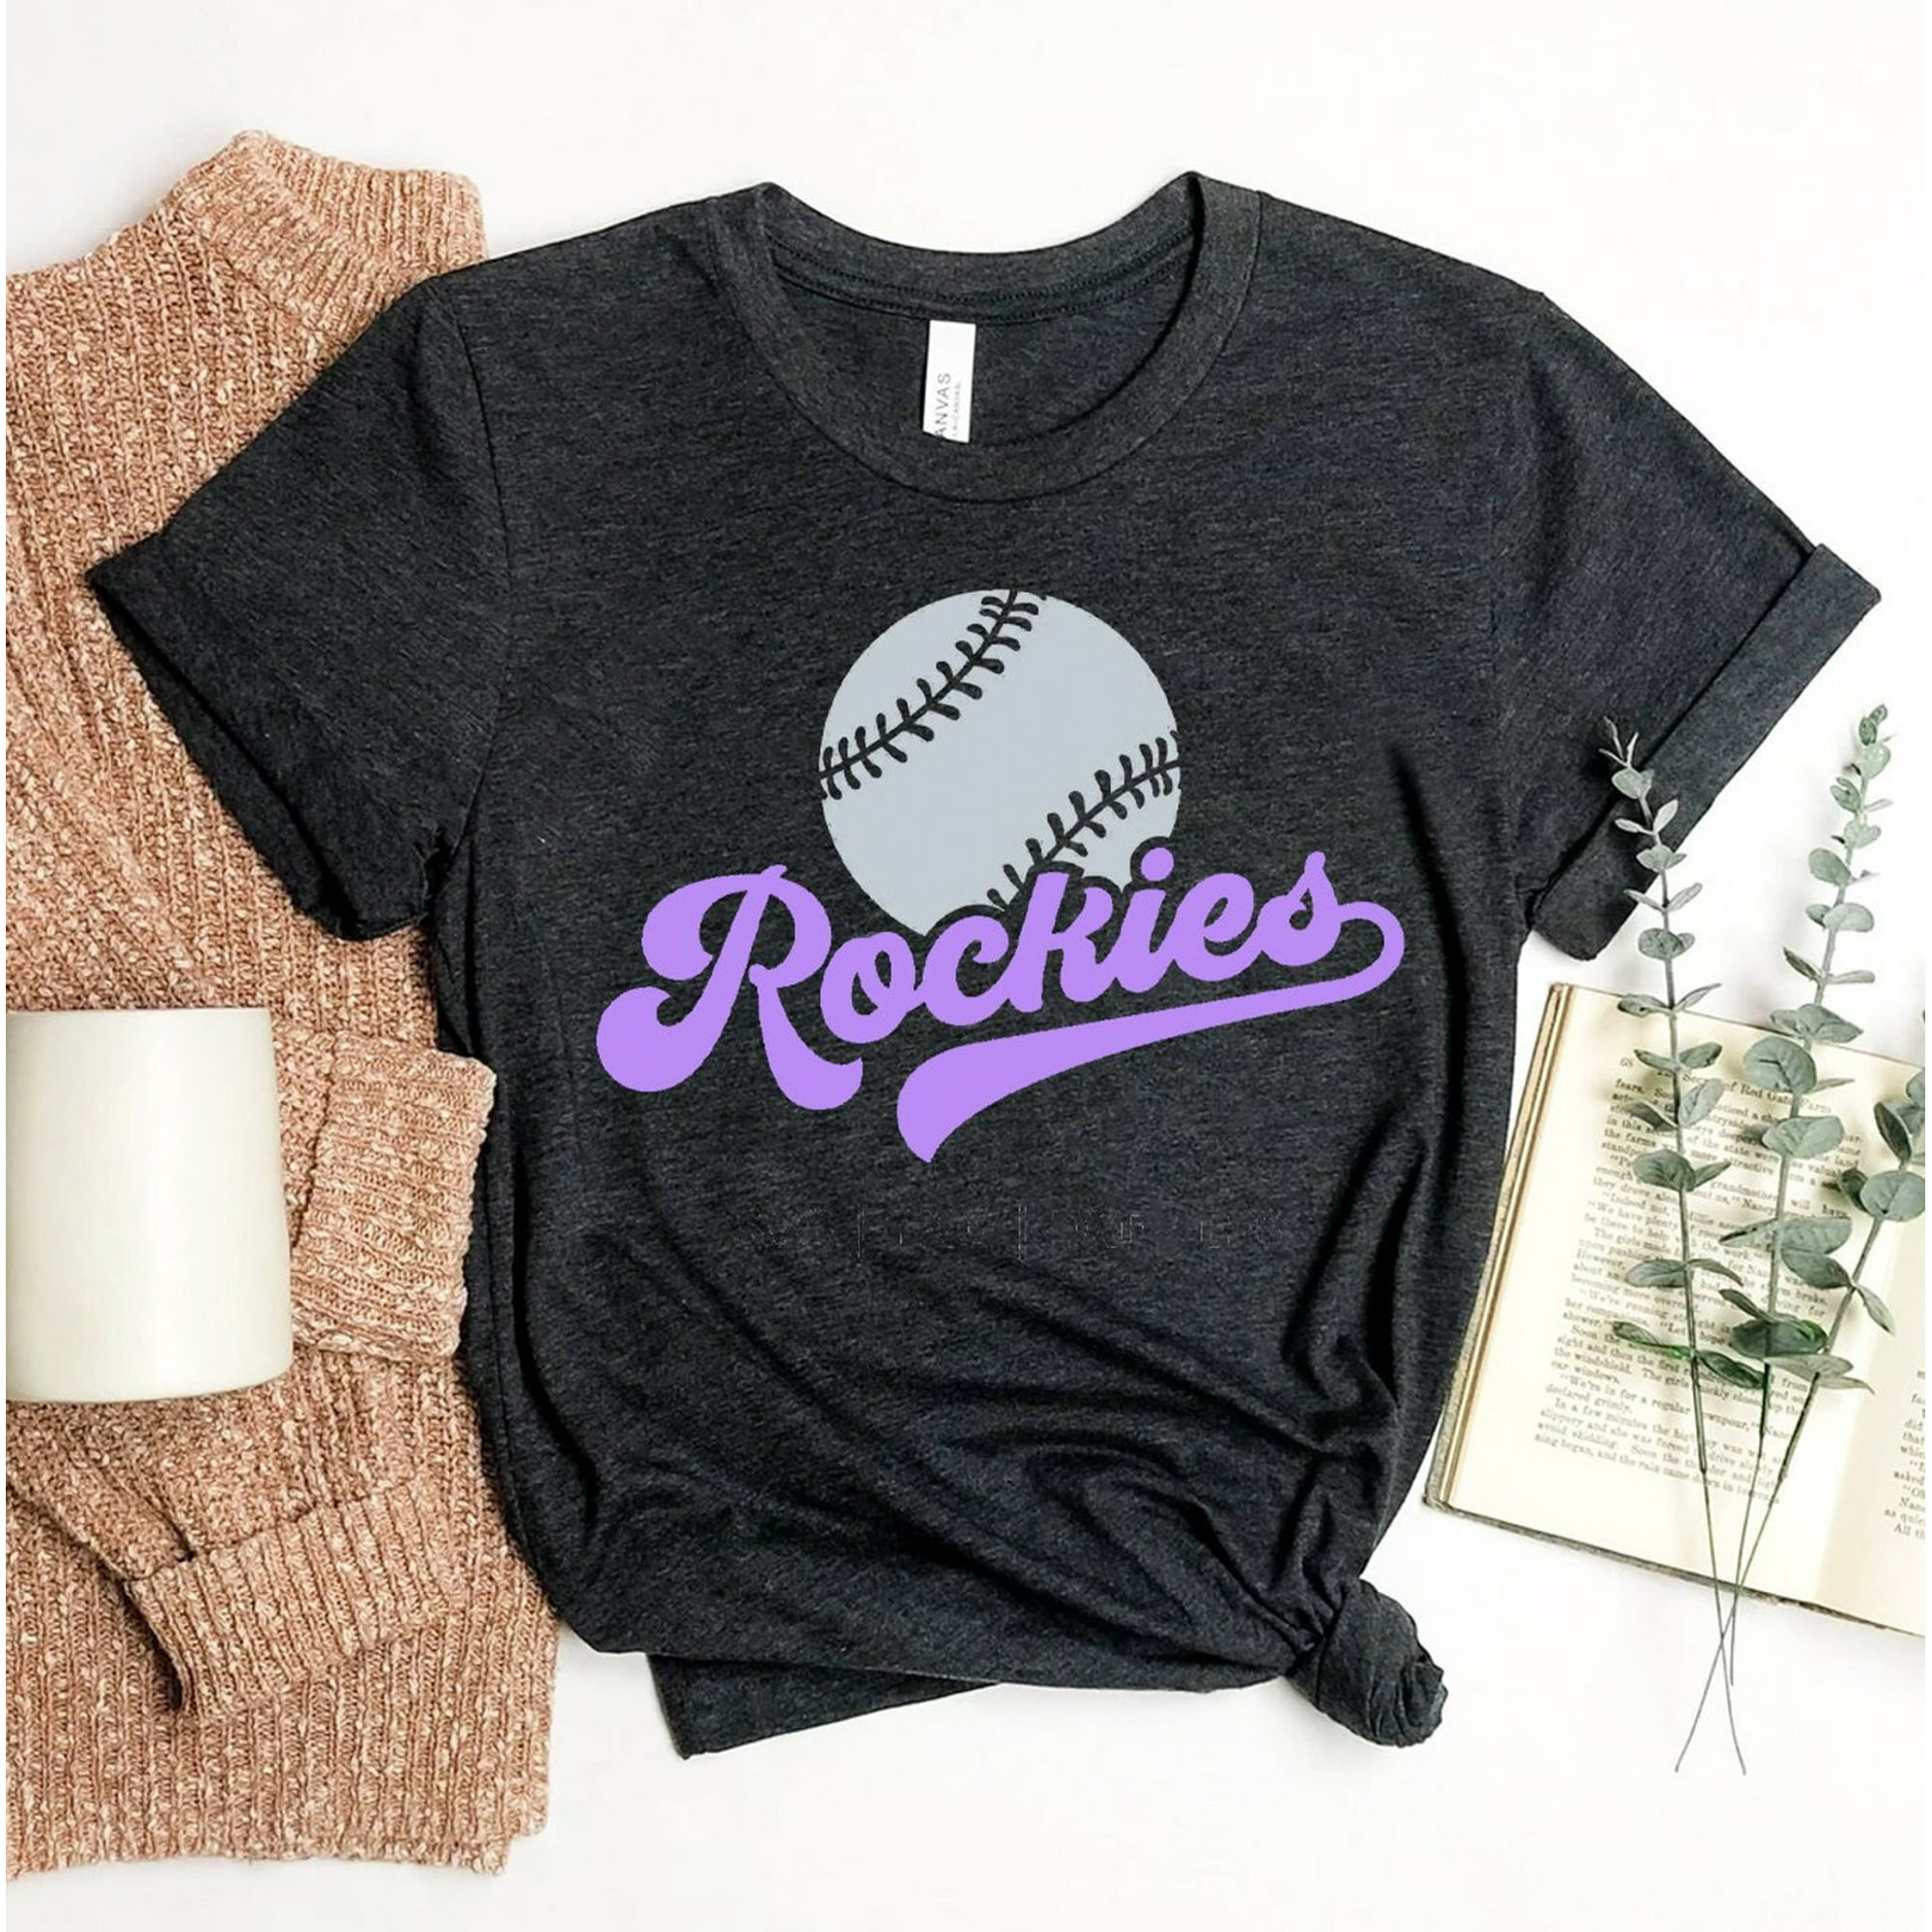 Rockies Baseball T-shirt Sports Shirt Gift Rangers Tee Game Day Top Boho  Shirts Team Spirit Women's